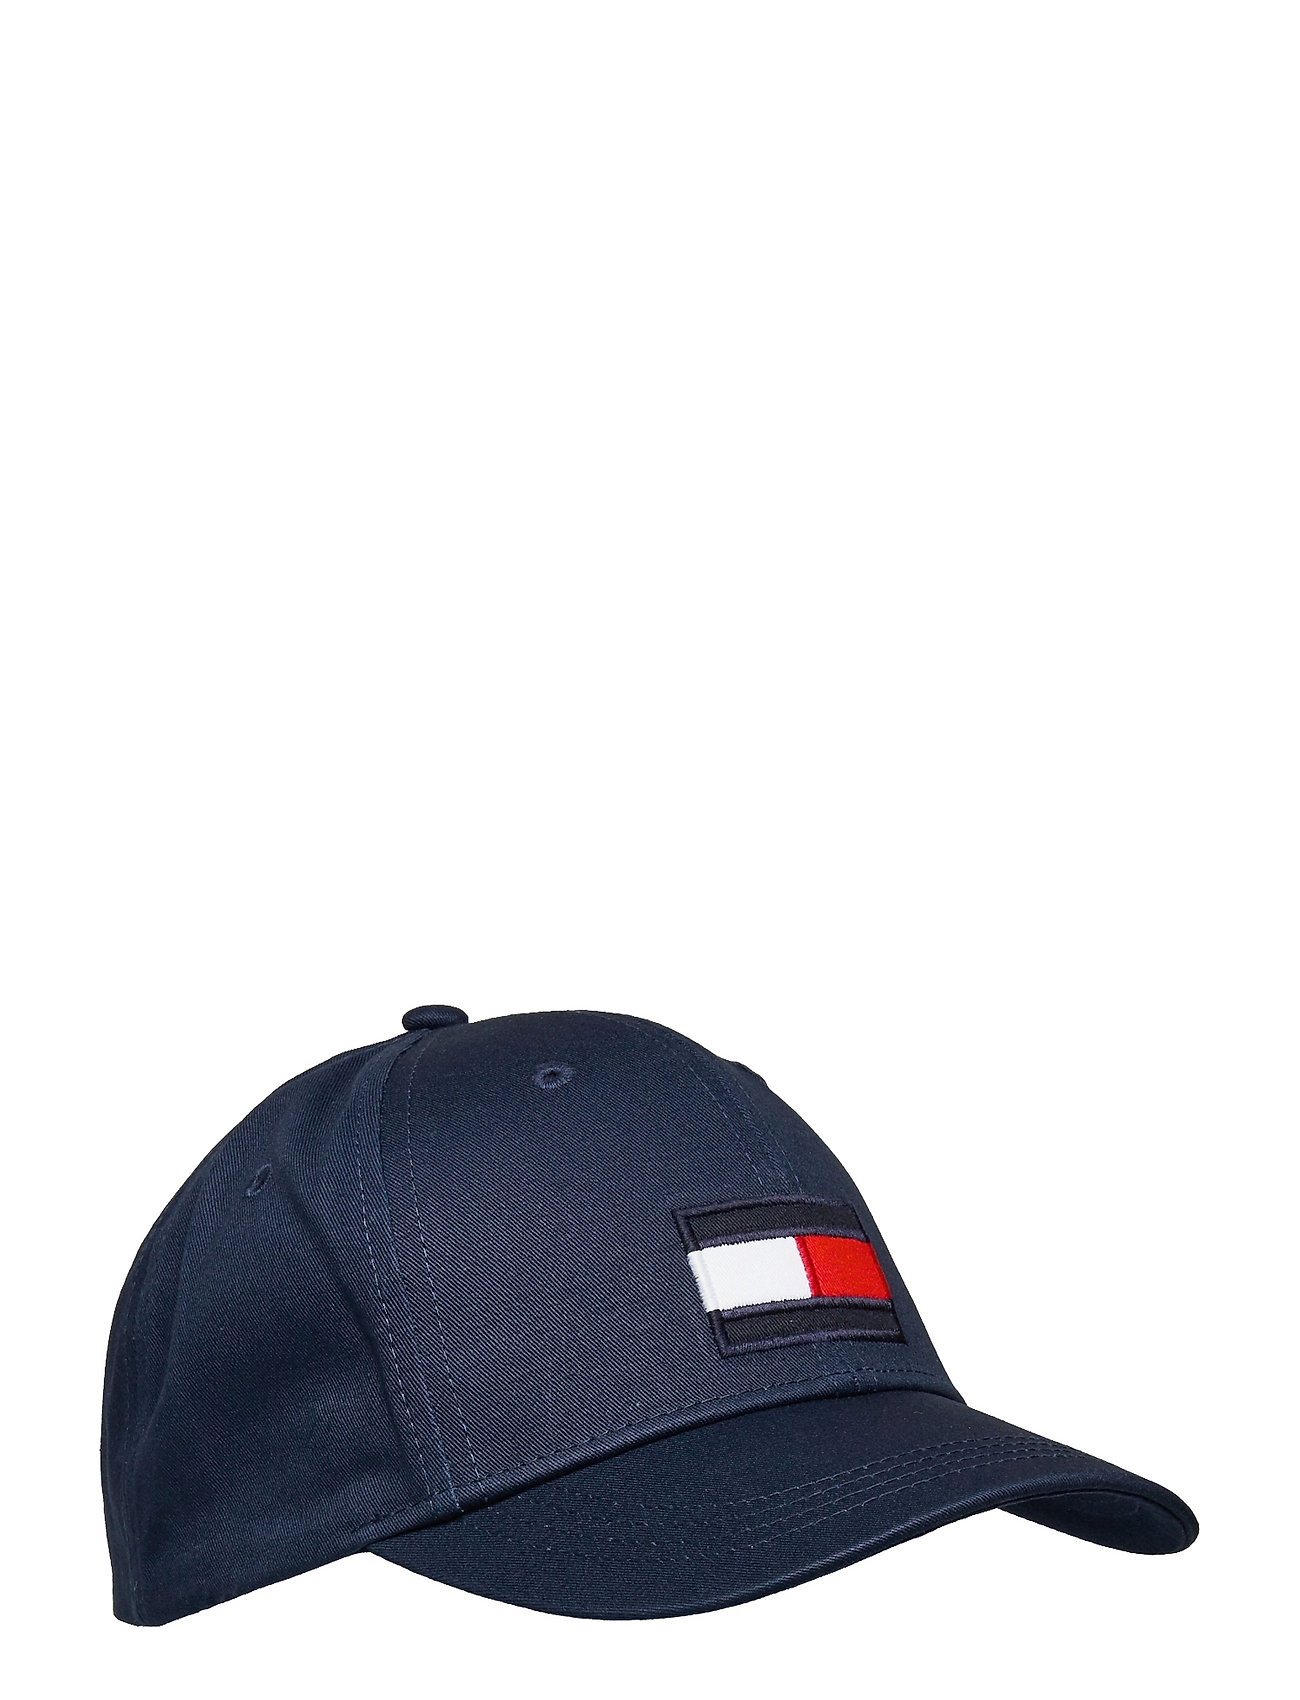 Big Flag Cap Accessories Headwear Caps Sininen Tommy Hilfiger